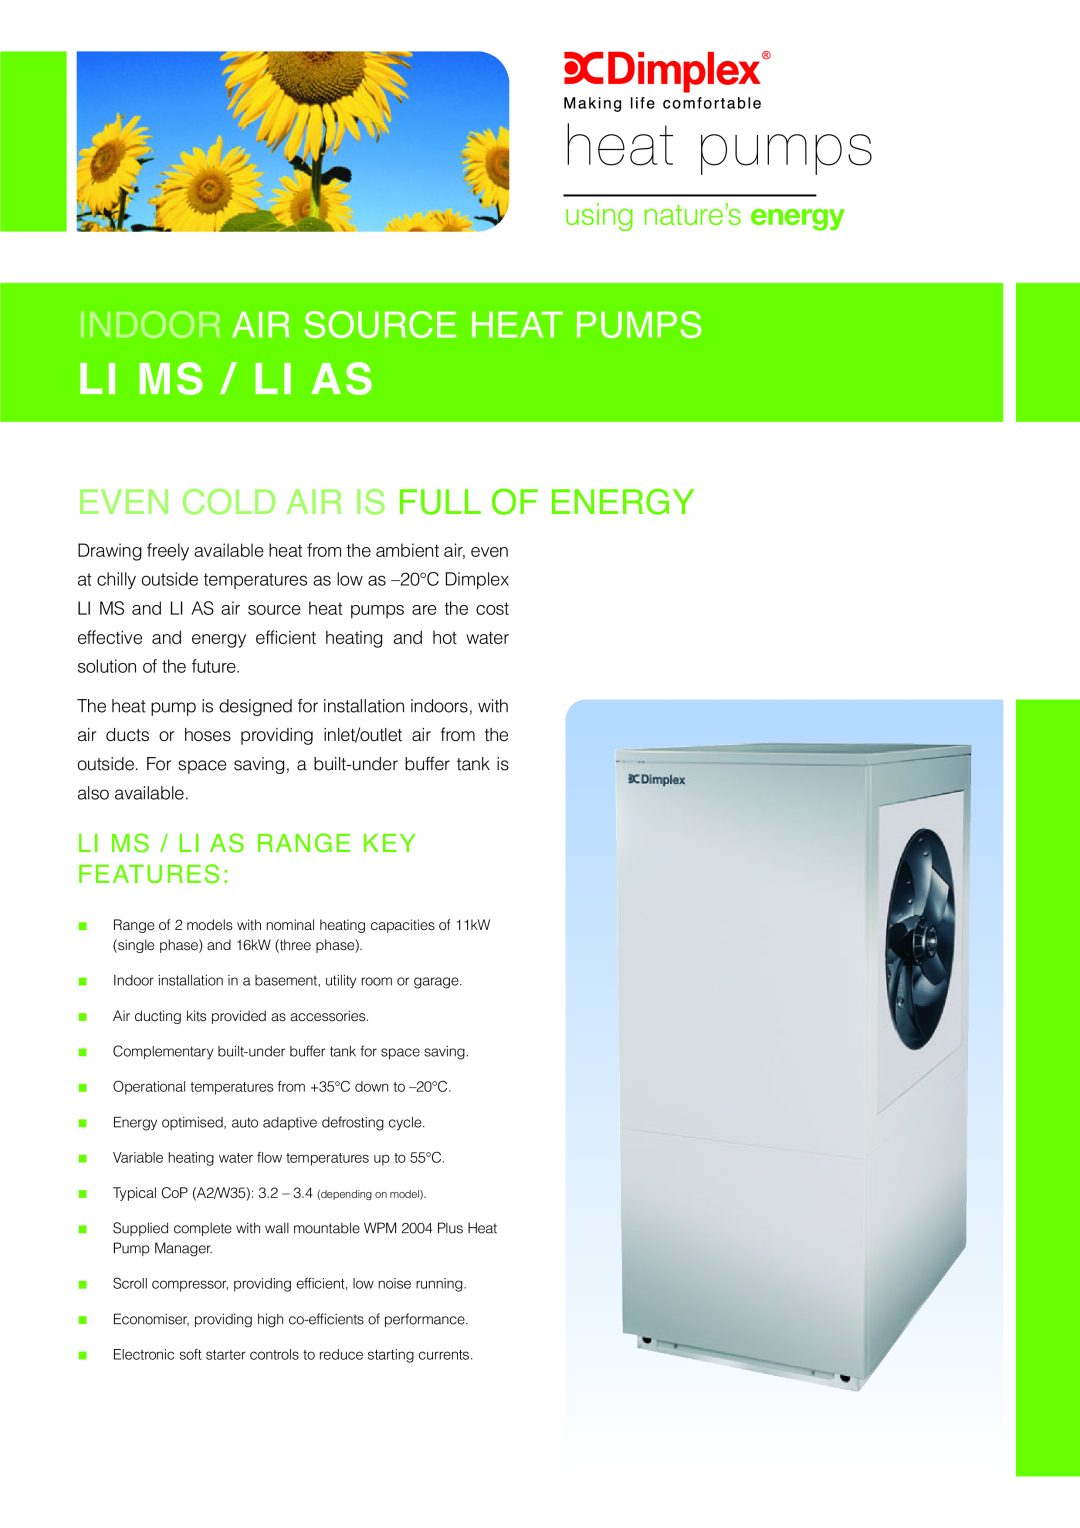 Dimplex LI MS, LI AS manual heat pumps, Li Ms / Li As, Indoor Air Source Heat Pumps, Even Cold Air Is Full Of Energy 